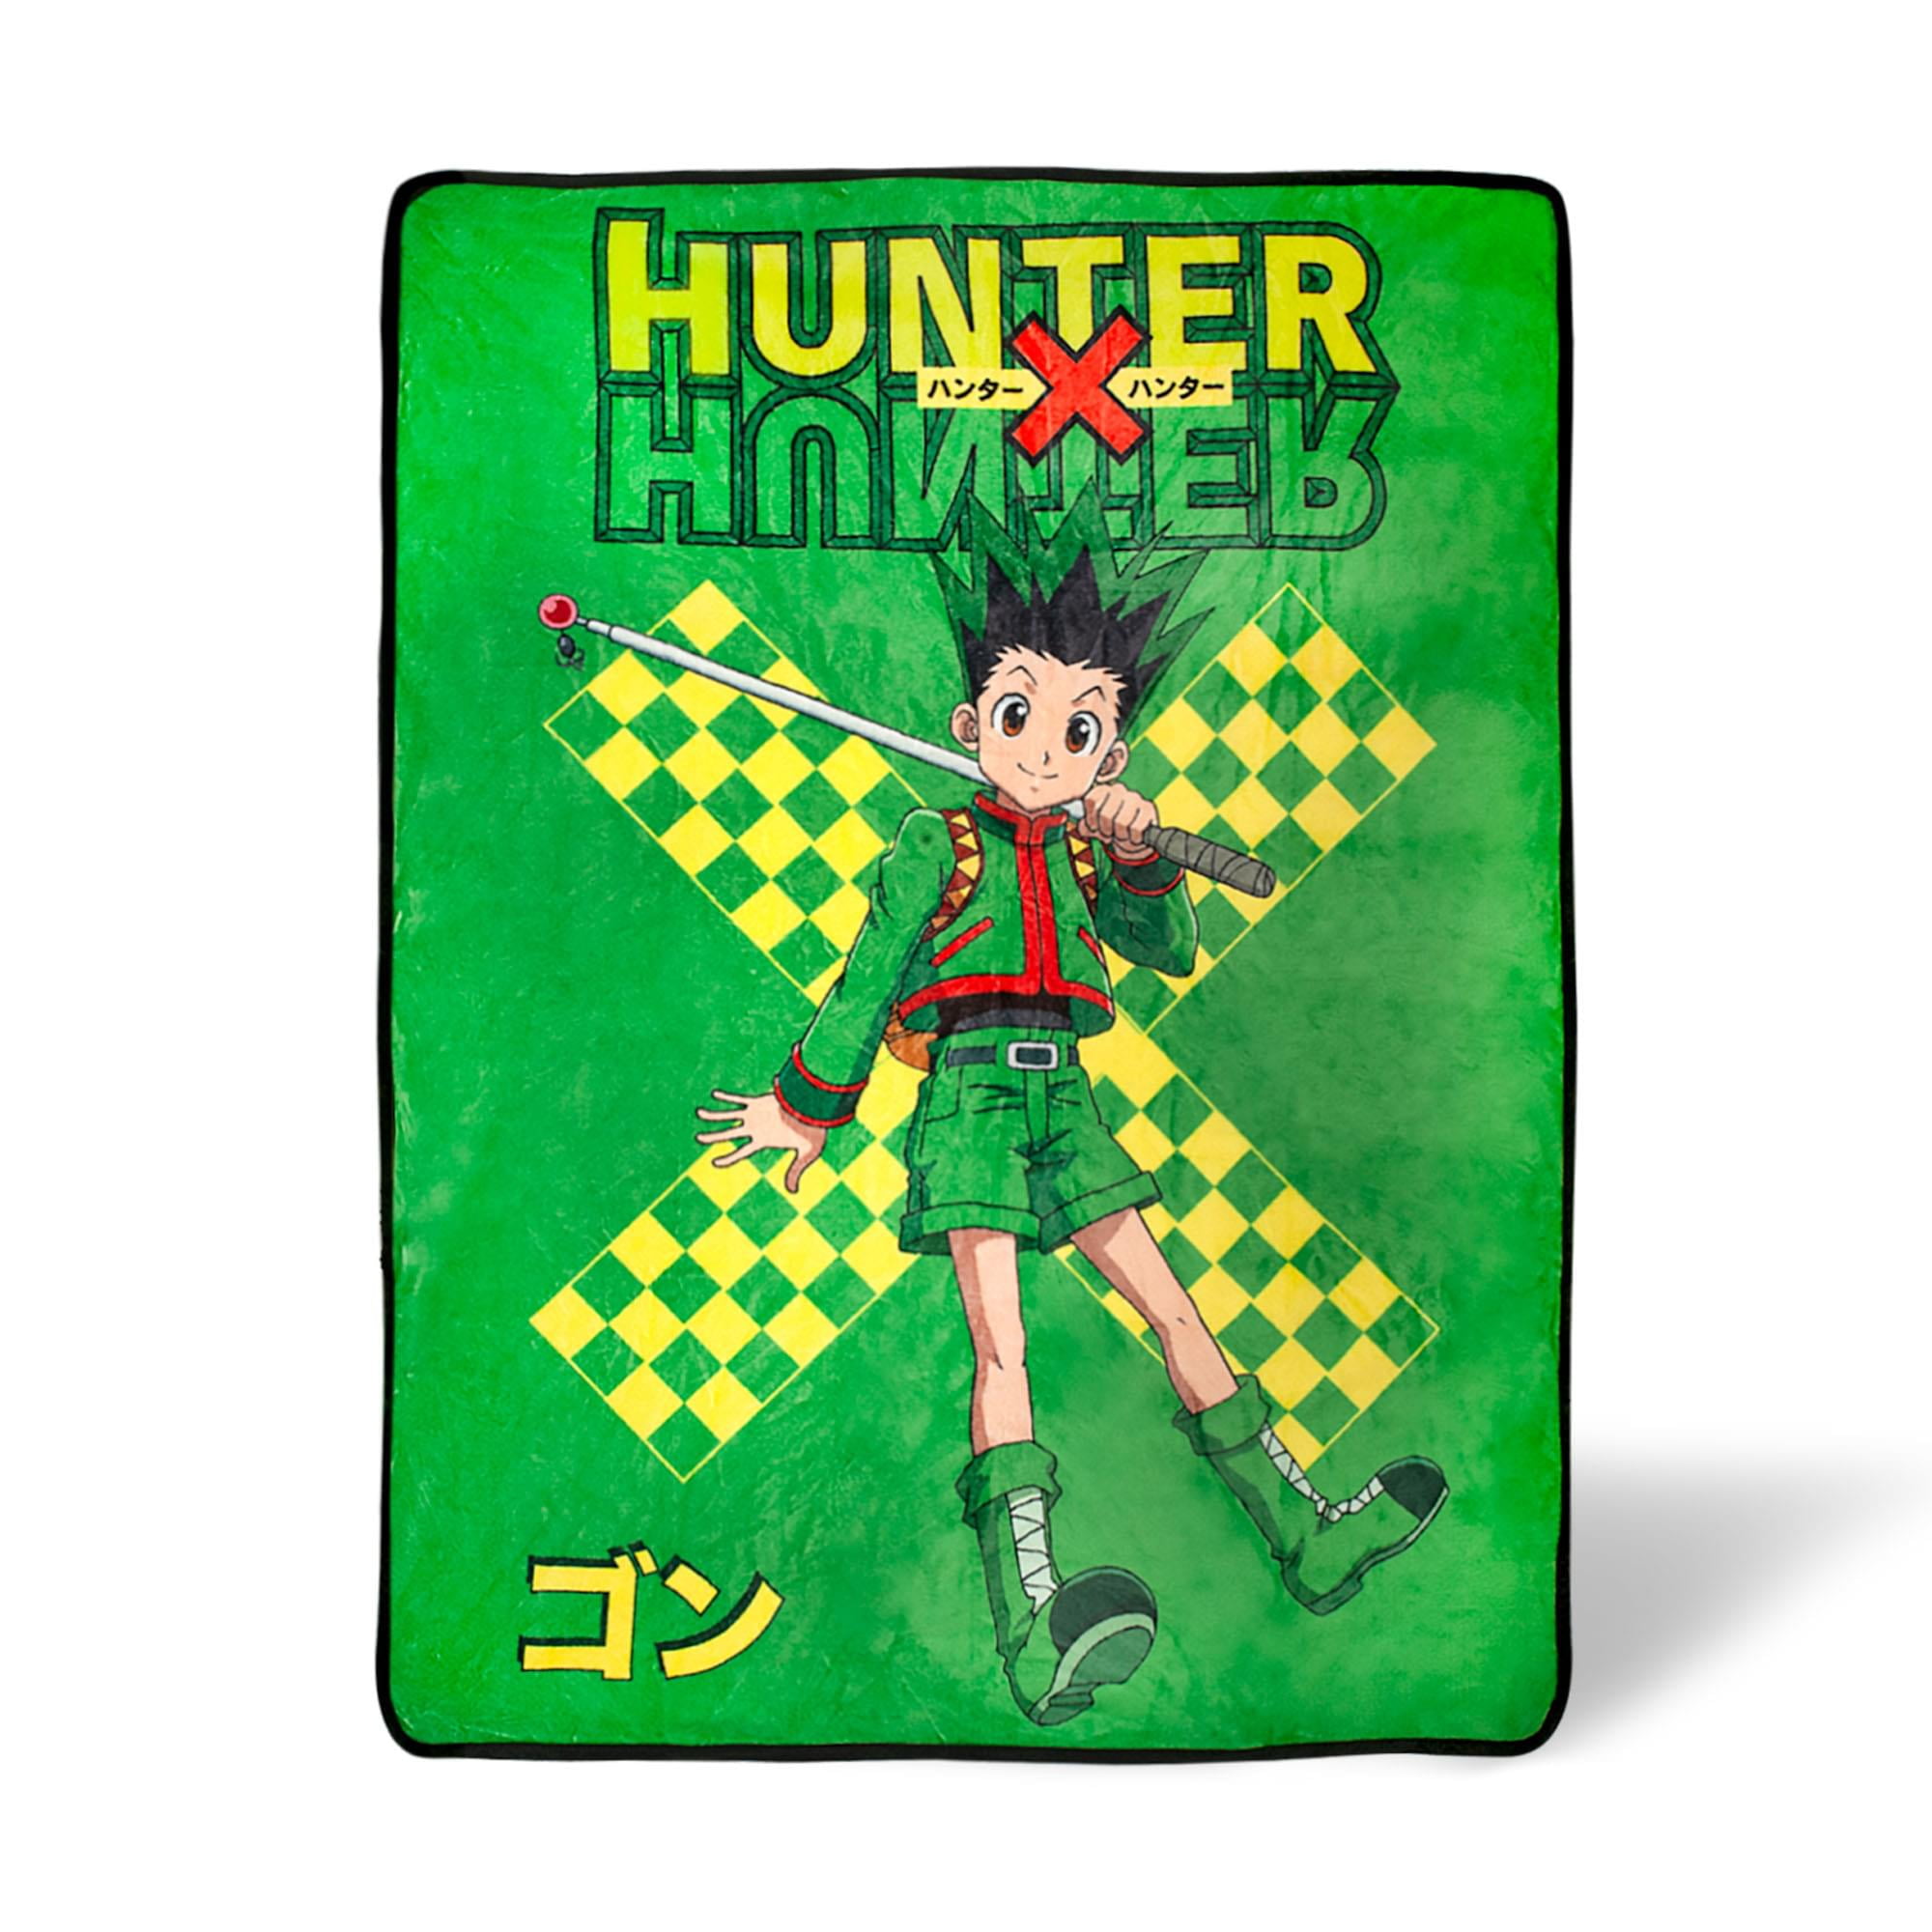  Hunter x Hunter Gon Freecss & Killua Throw Blanket 45 x 60  Official Hunter X Hunter Merch Super Soft Anime Throw Blanket : Sports &  Outdoors